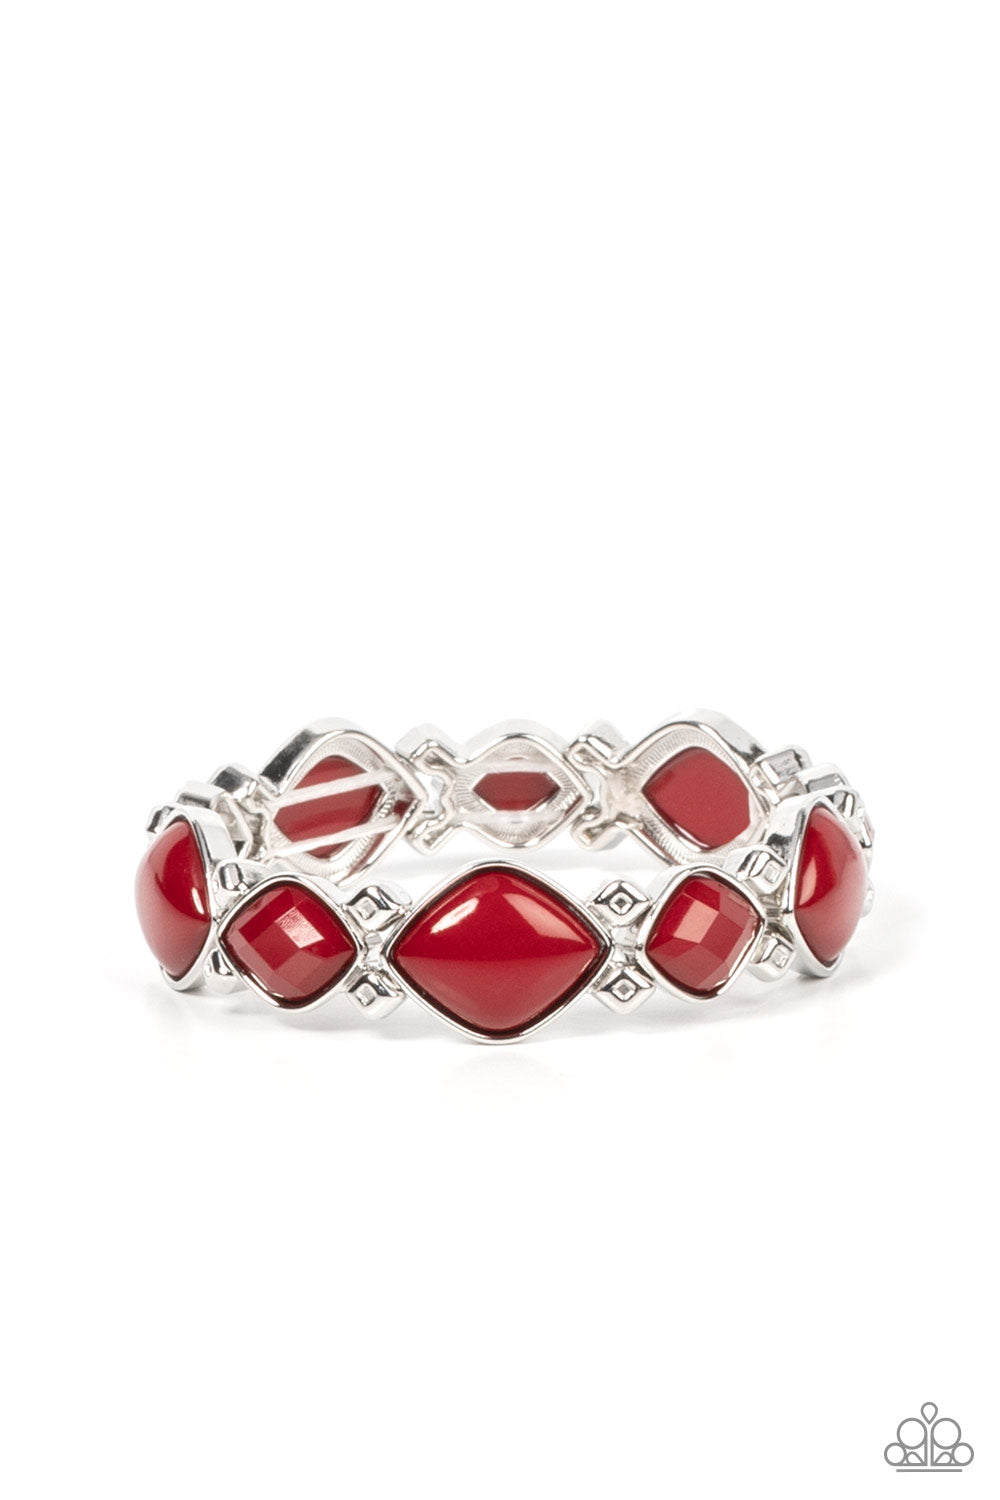 Boldly BEAD-azzled - Red & Silver Diamond Shaped Beaded Paparazzi Stretch Bracelet